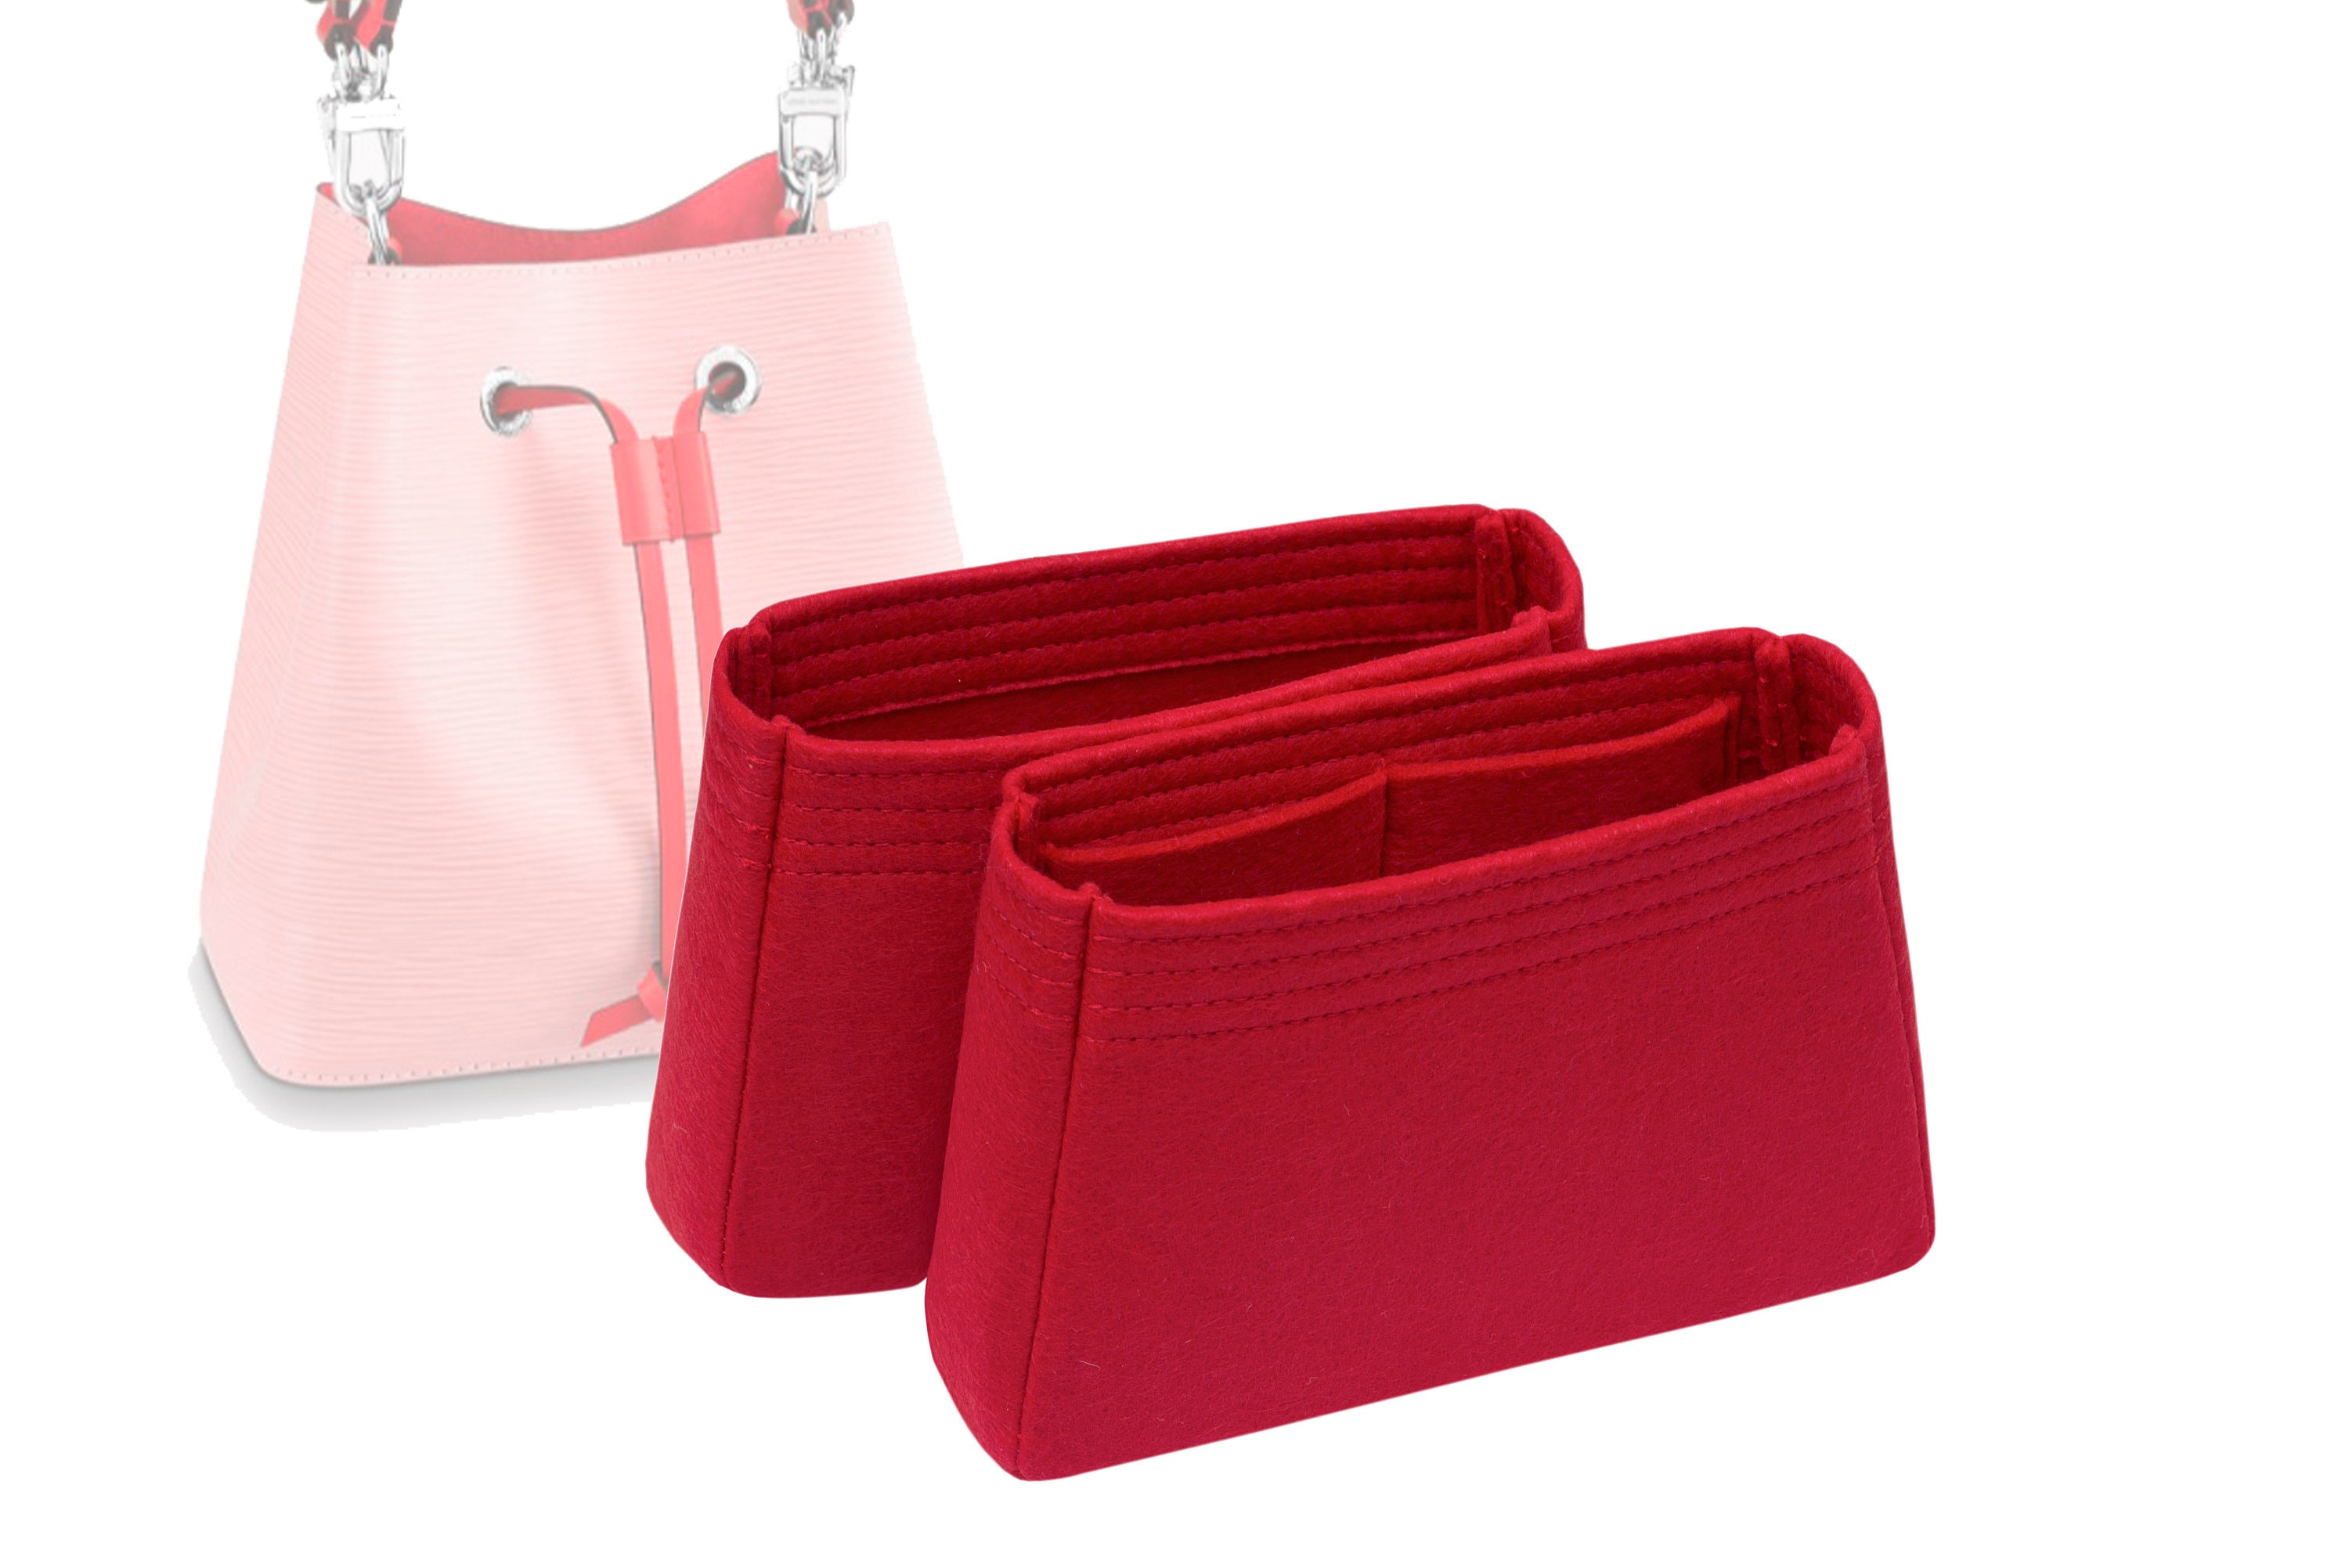 NÉONOÉ Neonoe MM Bucket Bag Red Pink Inserts Organizers 